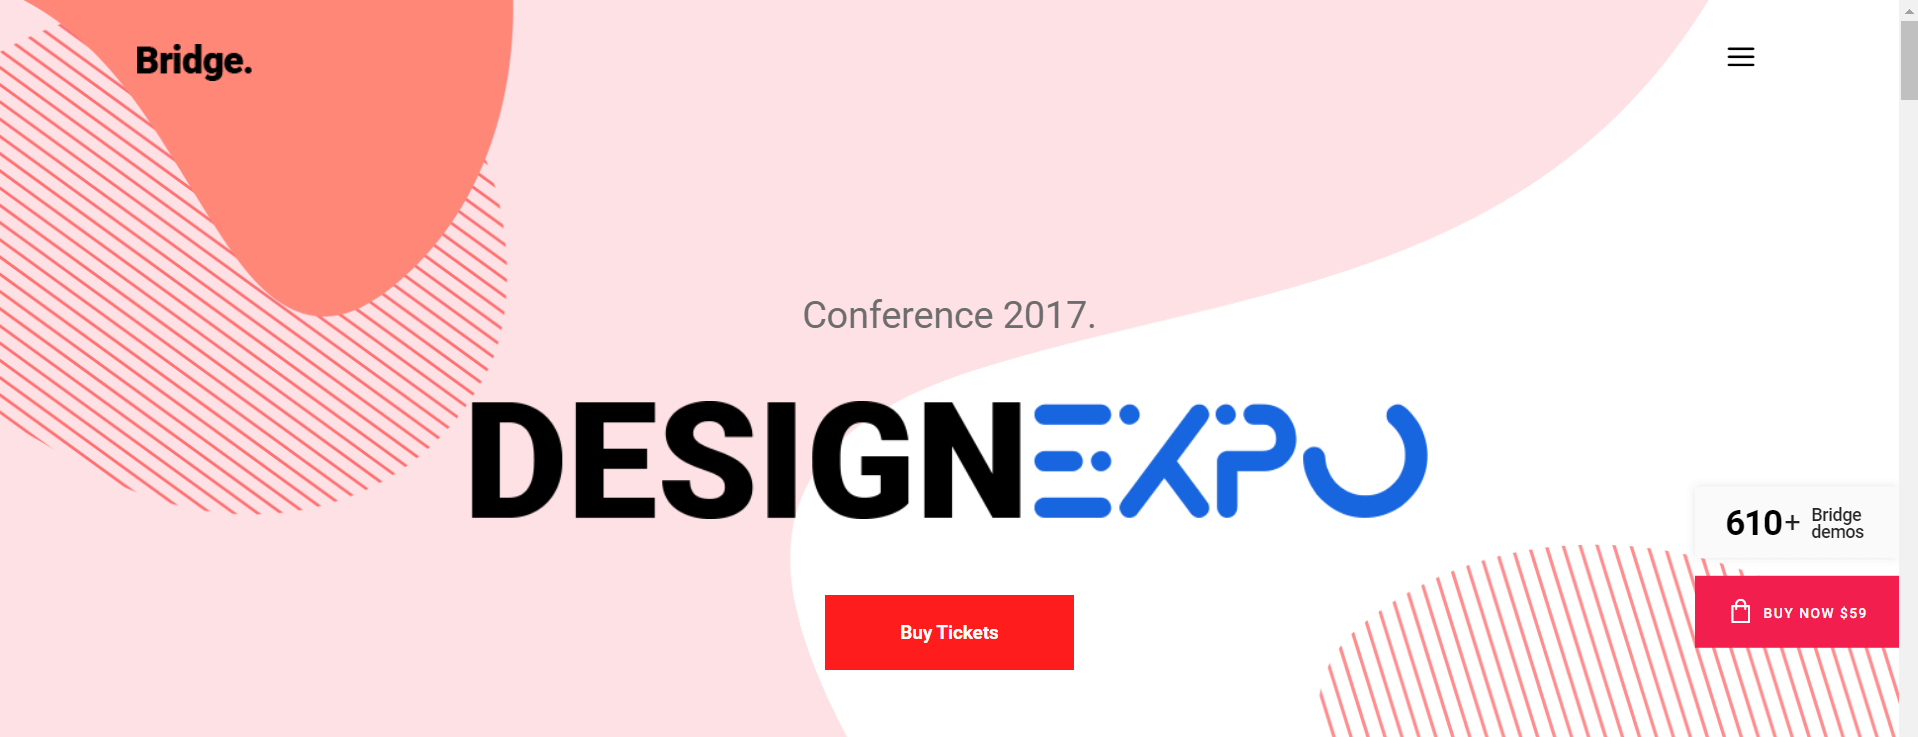 Conference - design conference